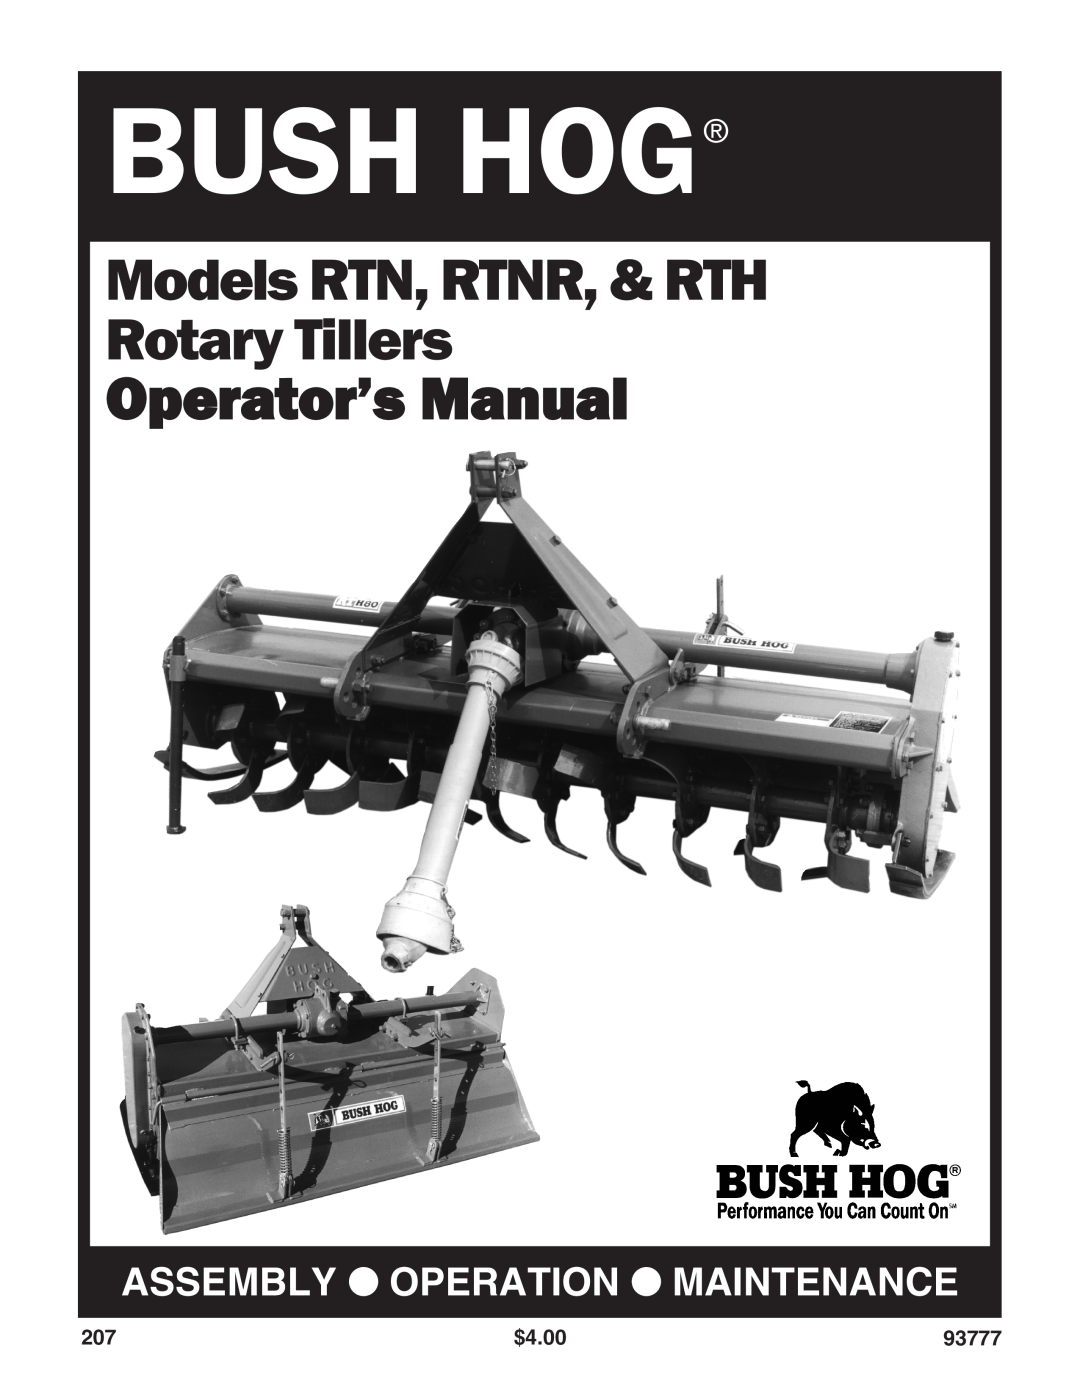 Bush Hog manual $4.00, 93777, Bush Hog, ModelsRTN, RTNR, & RTH Rotary Tillers, Operator’s Manual 